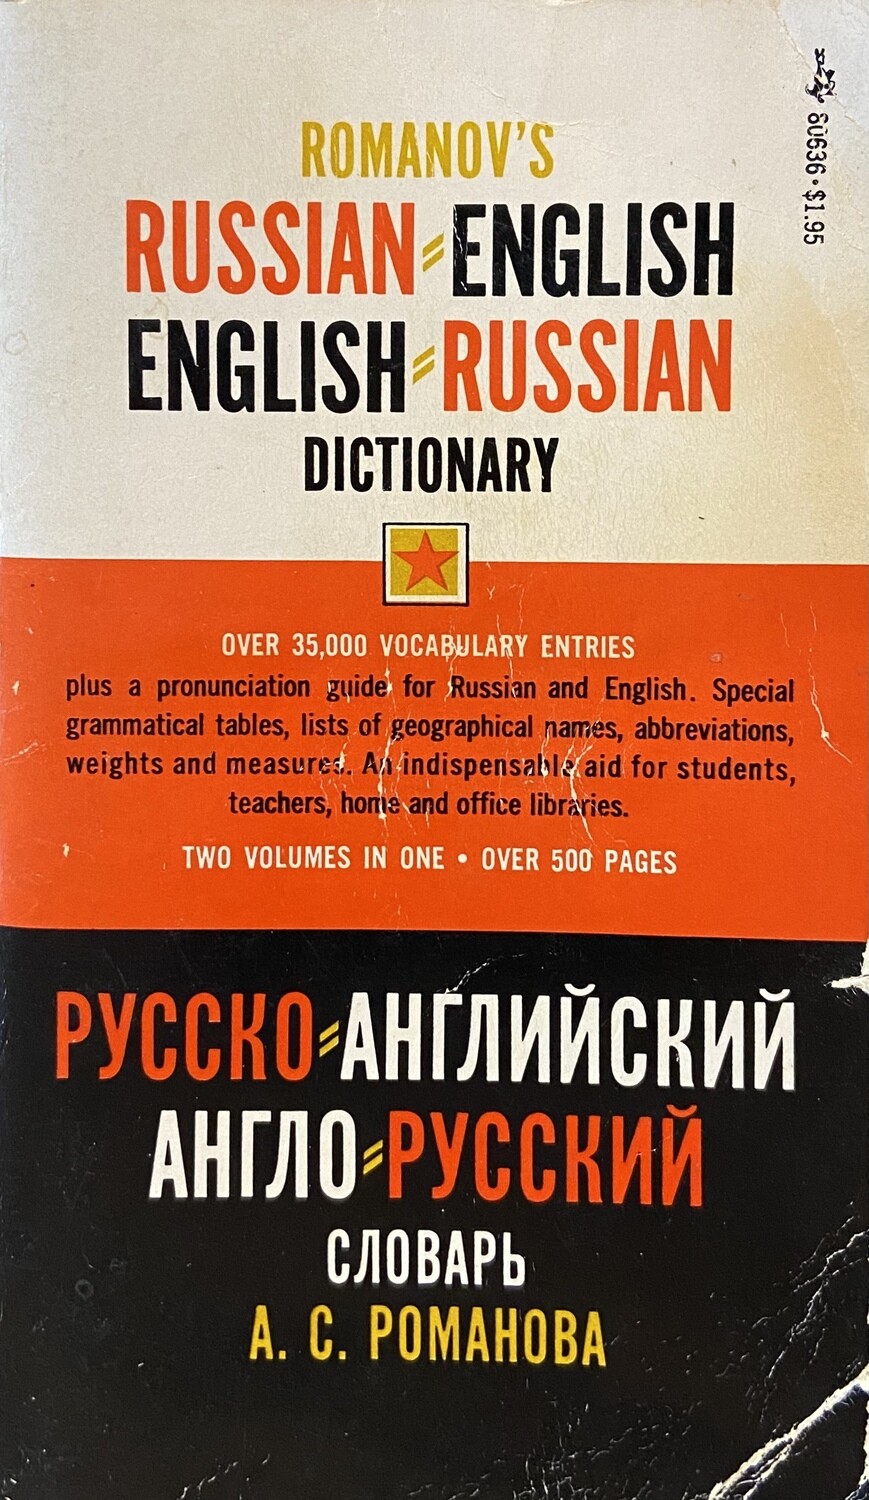 Romanov’s Russian-English English-Russian Dictionary